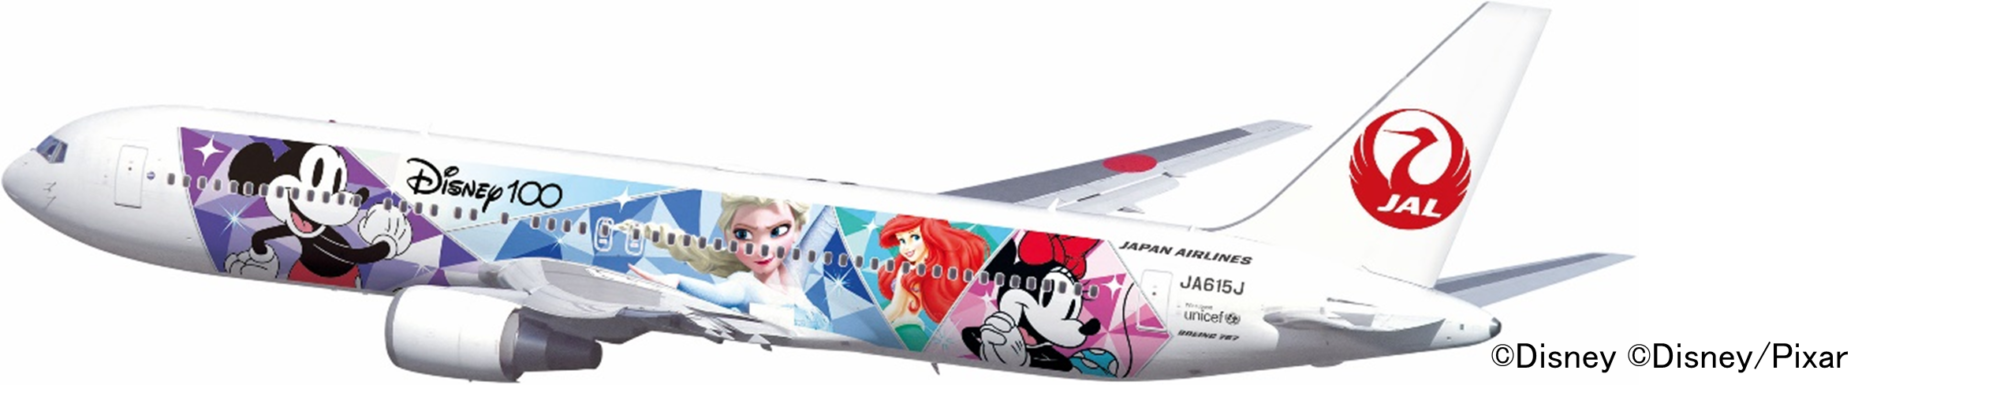 JapanAirlinesDisney100Plane 2